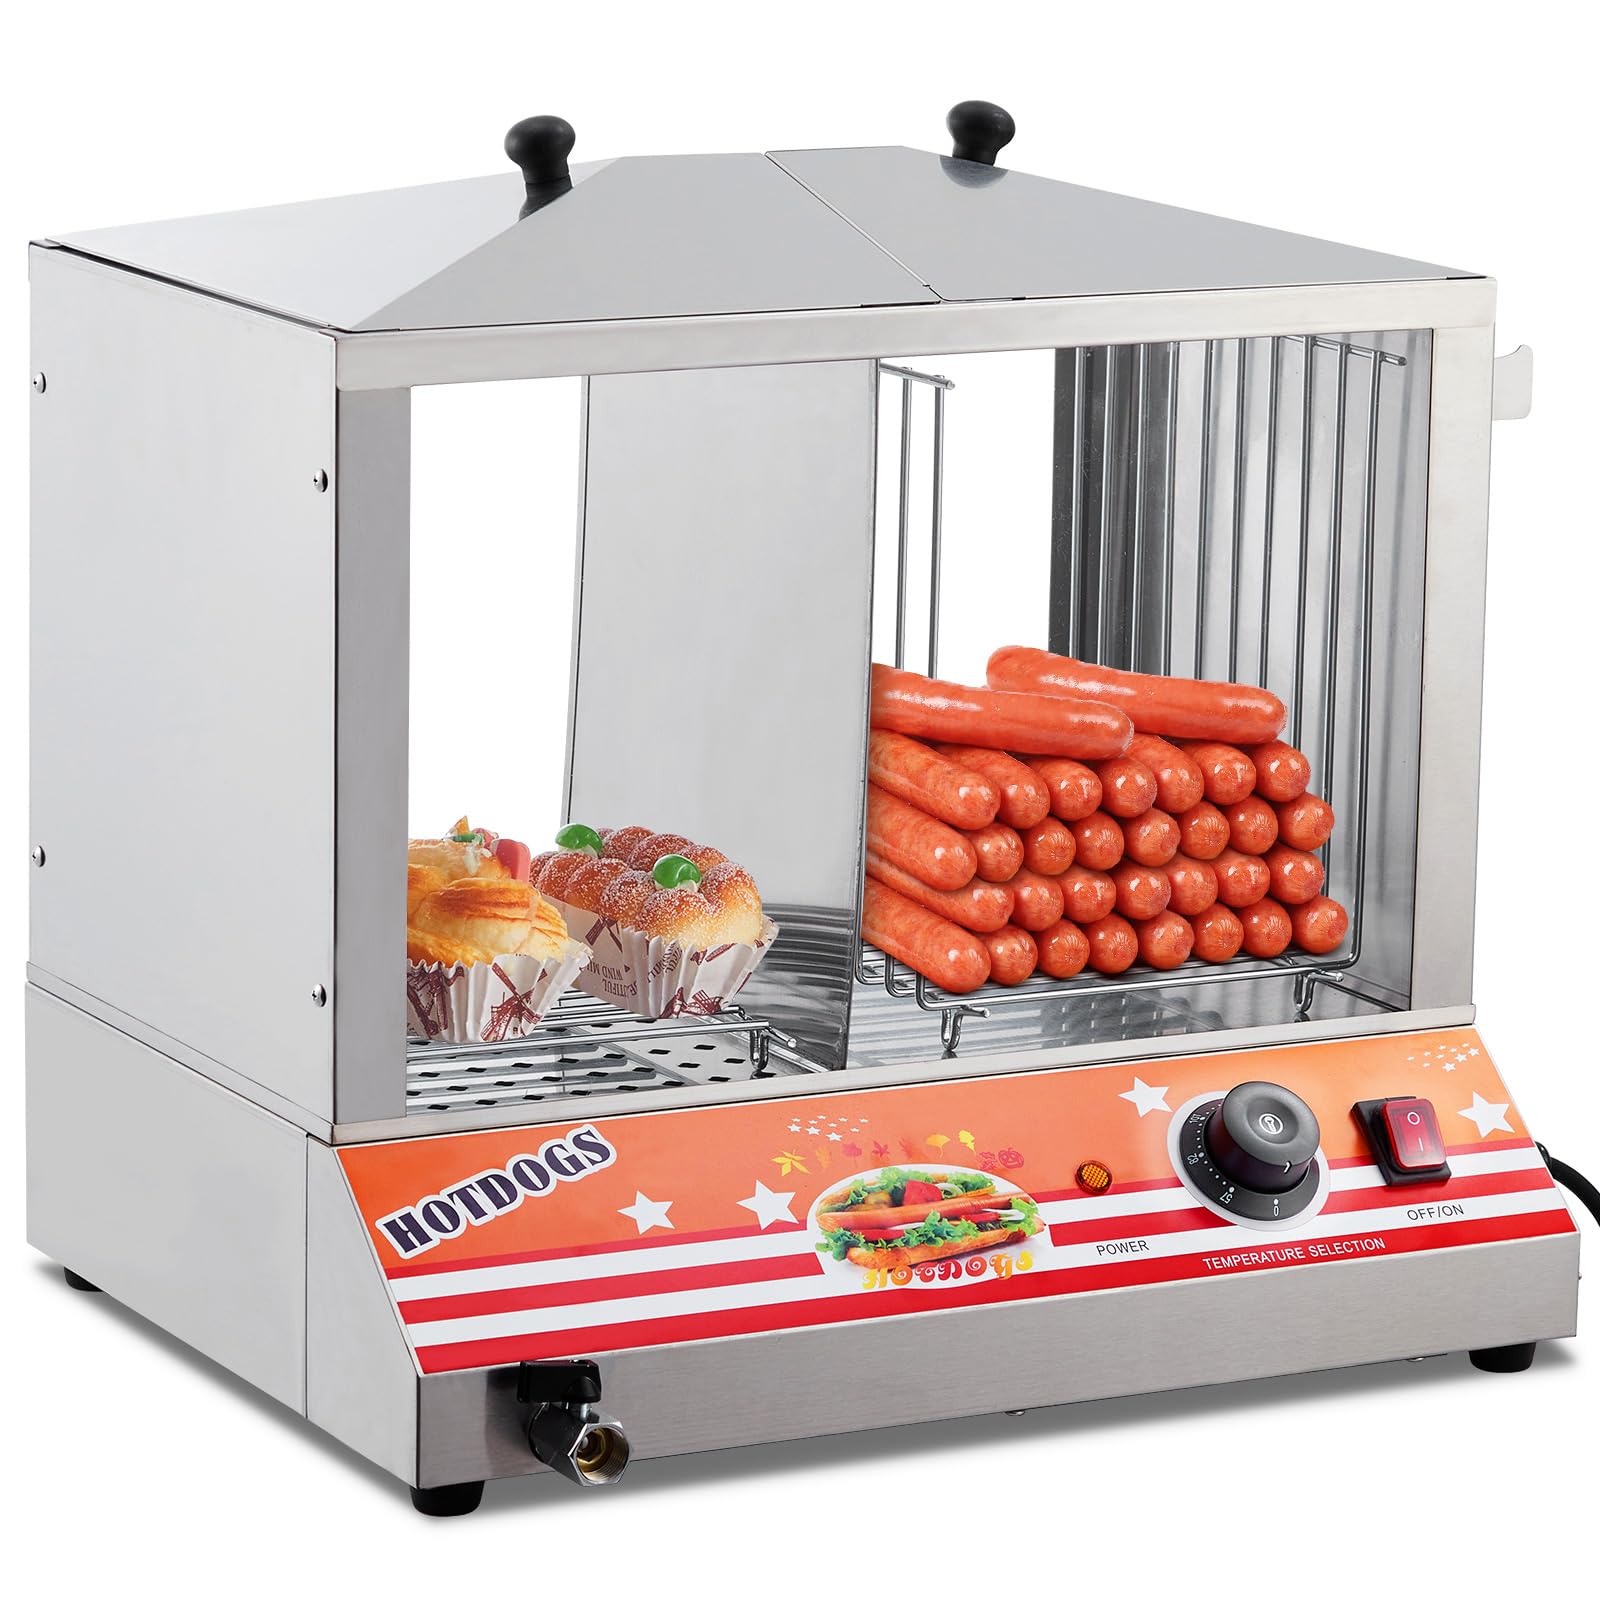 36L Hot Dog & Bun Steamer, Adjustable Temp, Stainless Steel